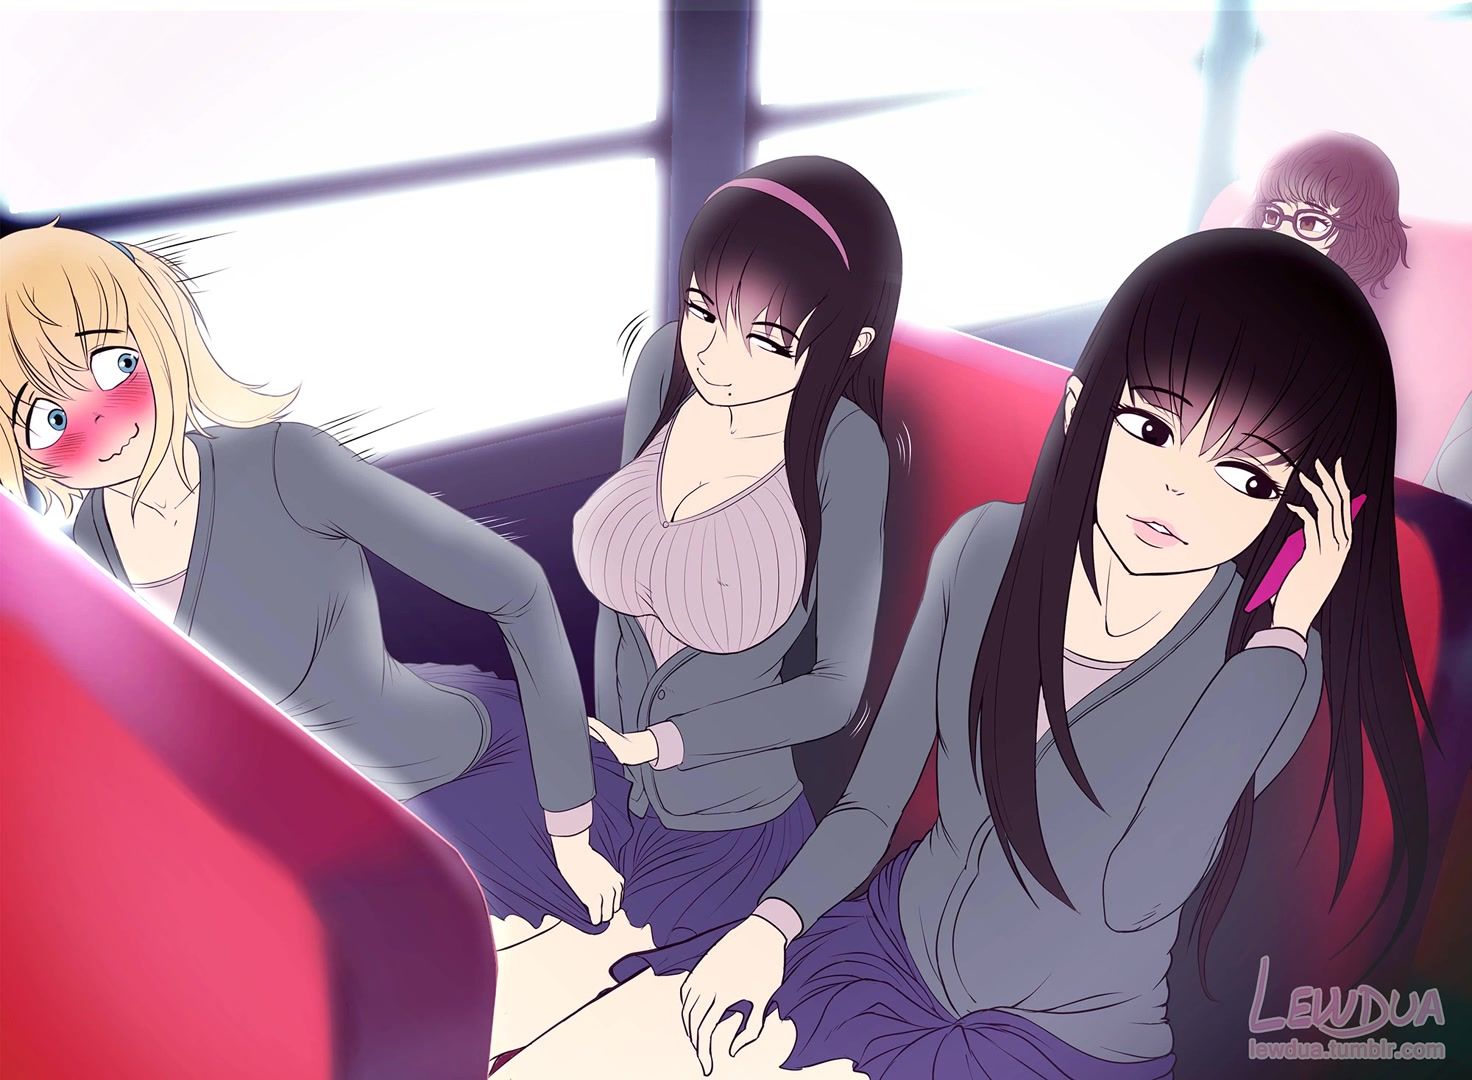 Teen anime girls secretly fuck on the student bus